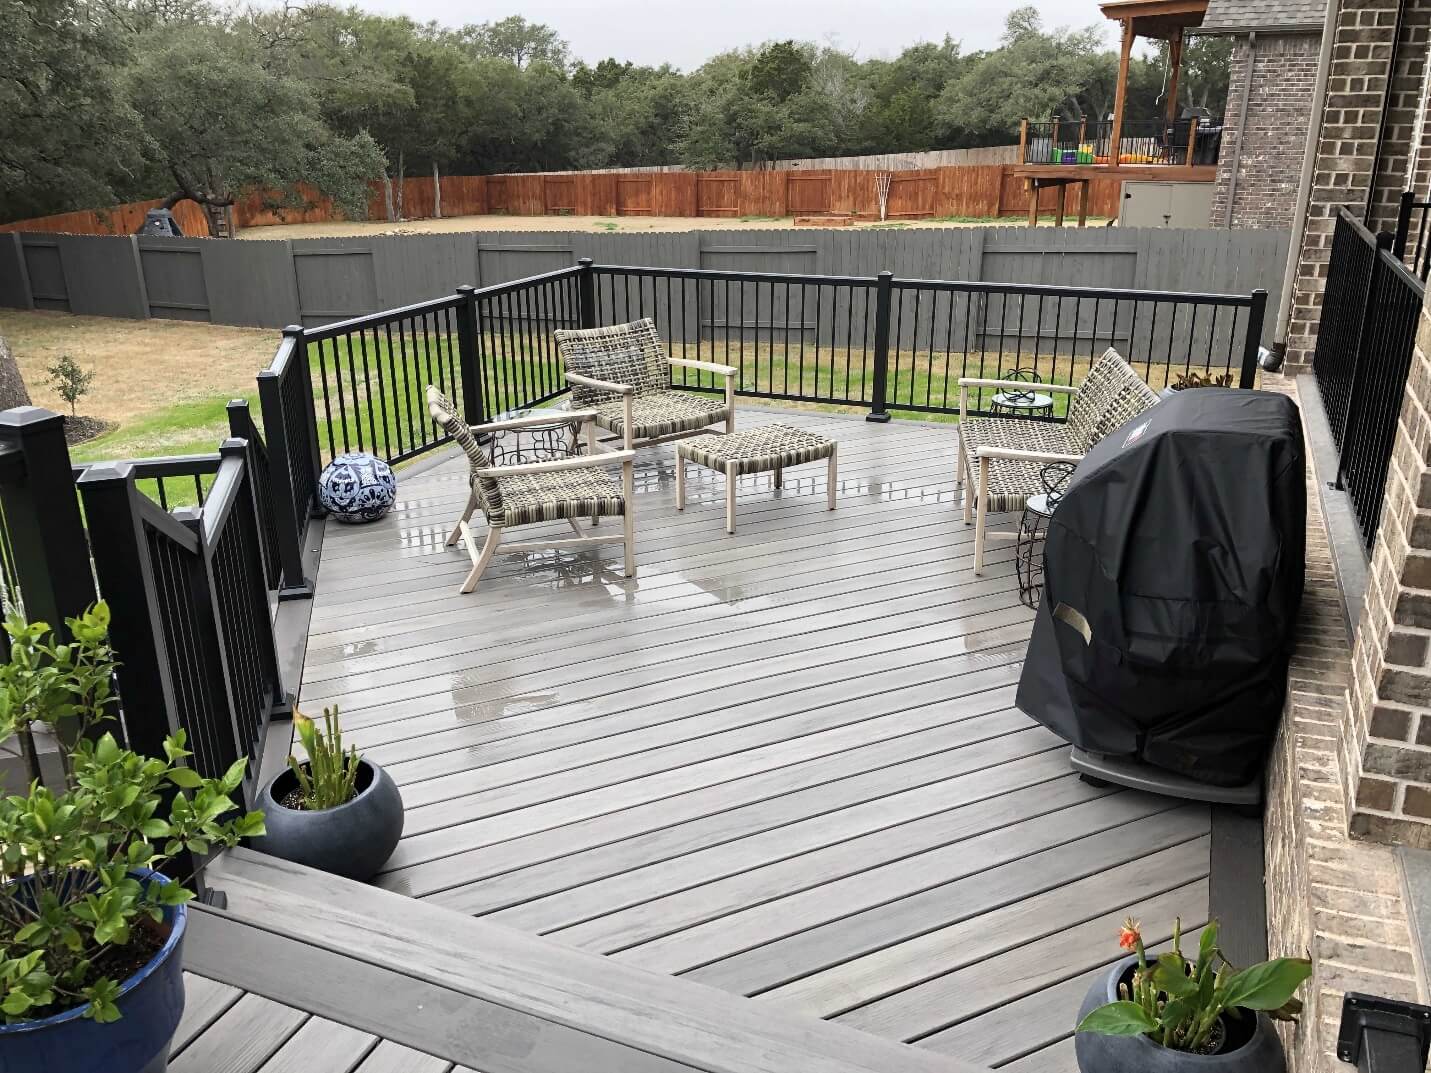 Custom backyard deck with seating area